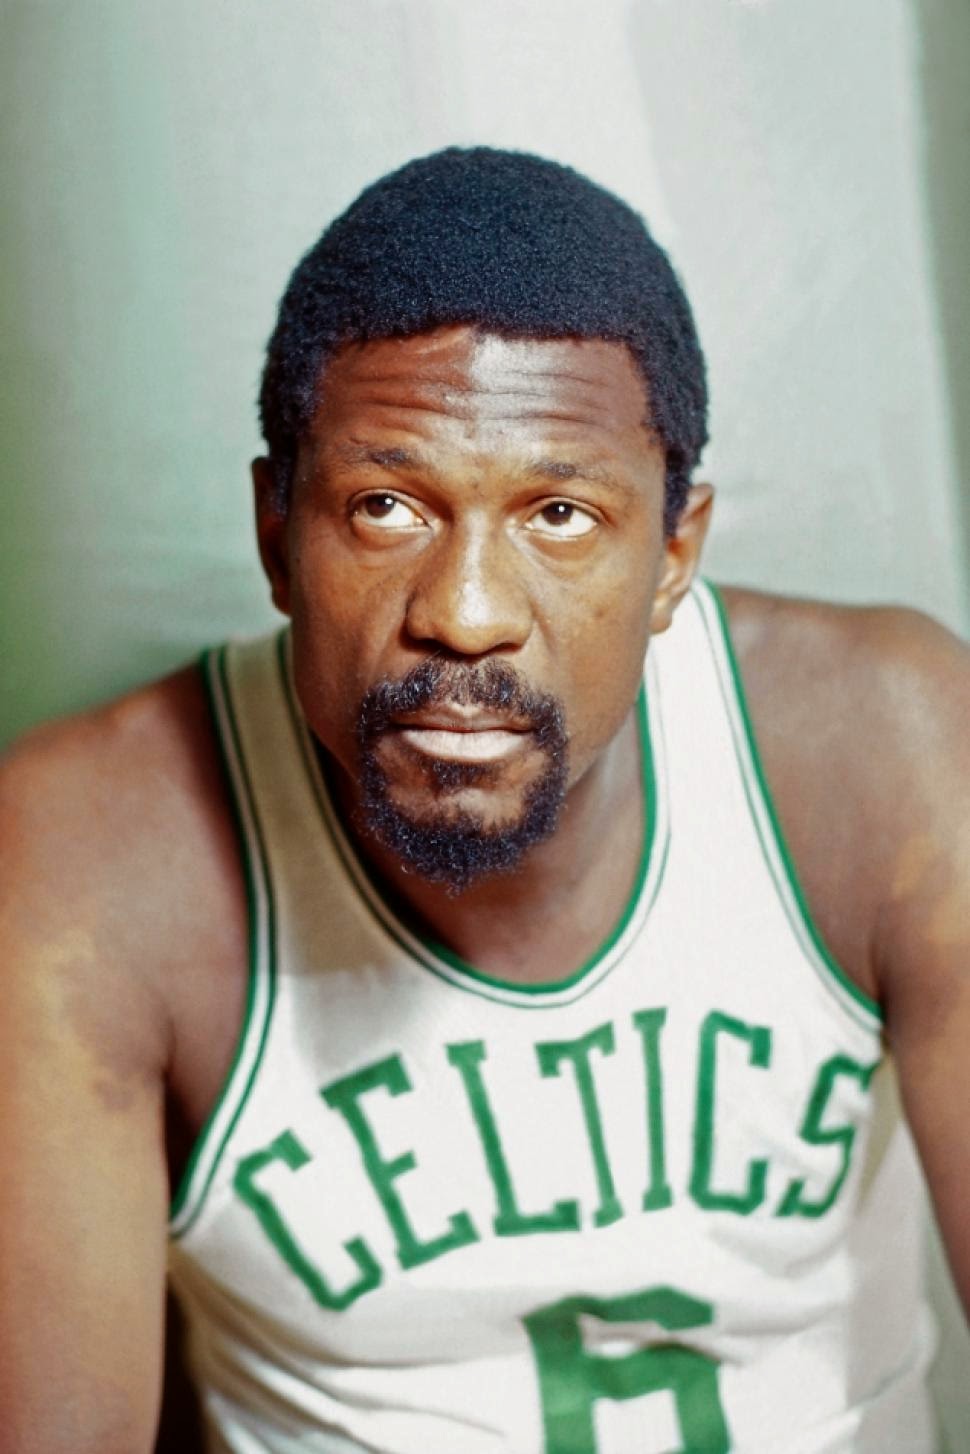 Lenda viva dos Celtics